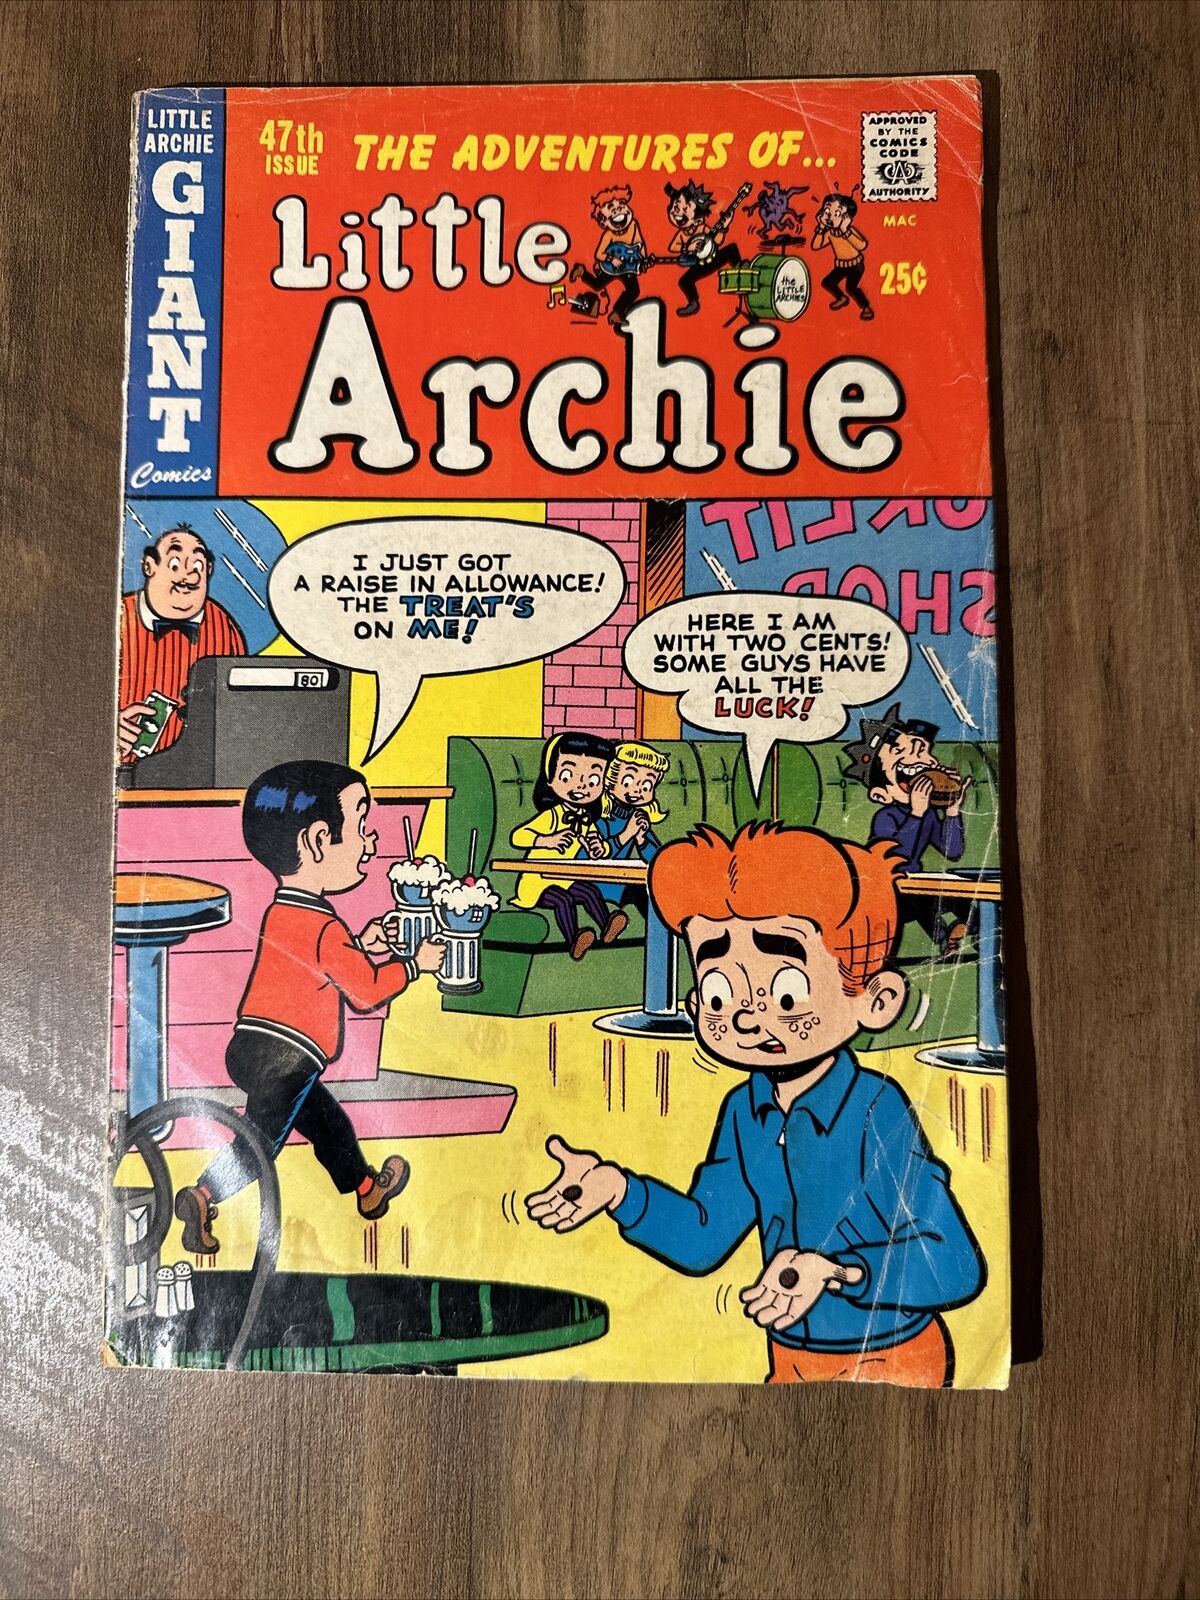 The Adventures of Little Archie #47 1968 Archie Comics